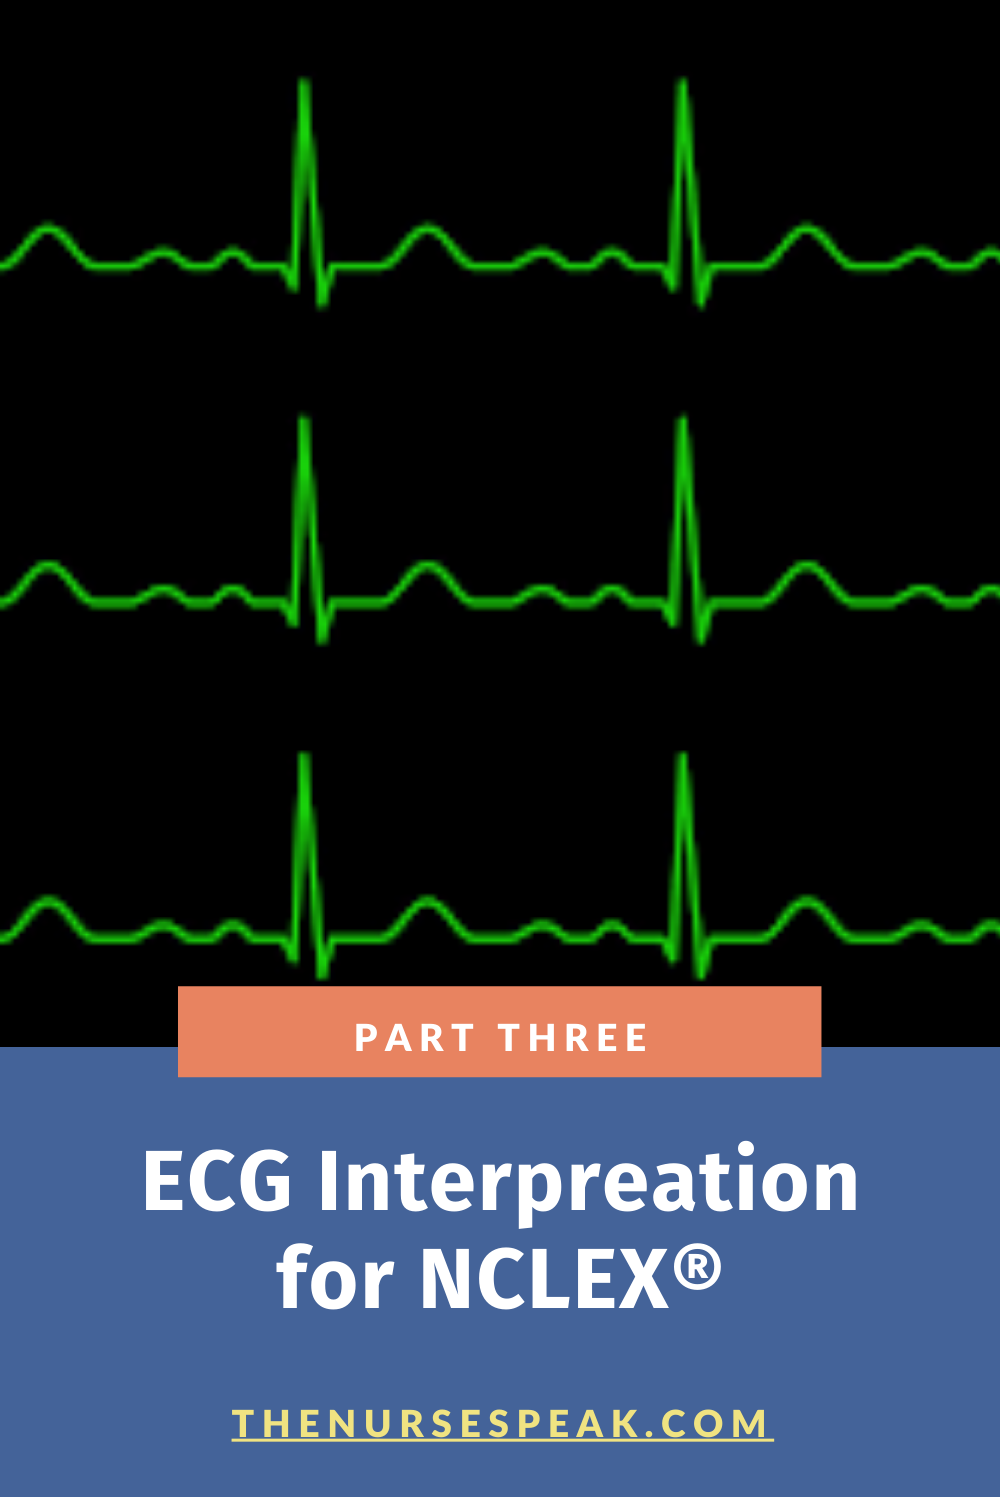 ECG INTERPRETATION FOR NCLEX: PART THREE